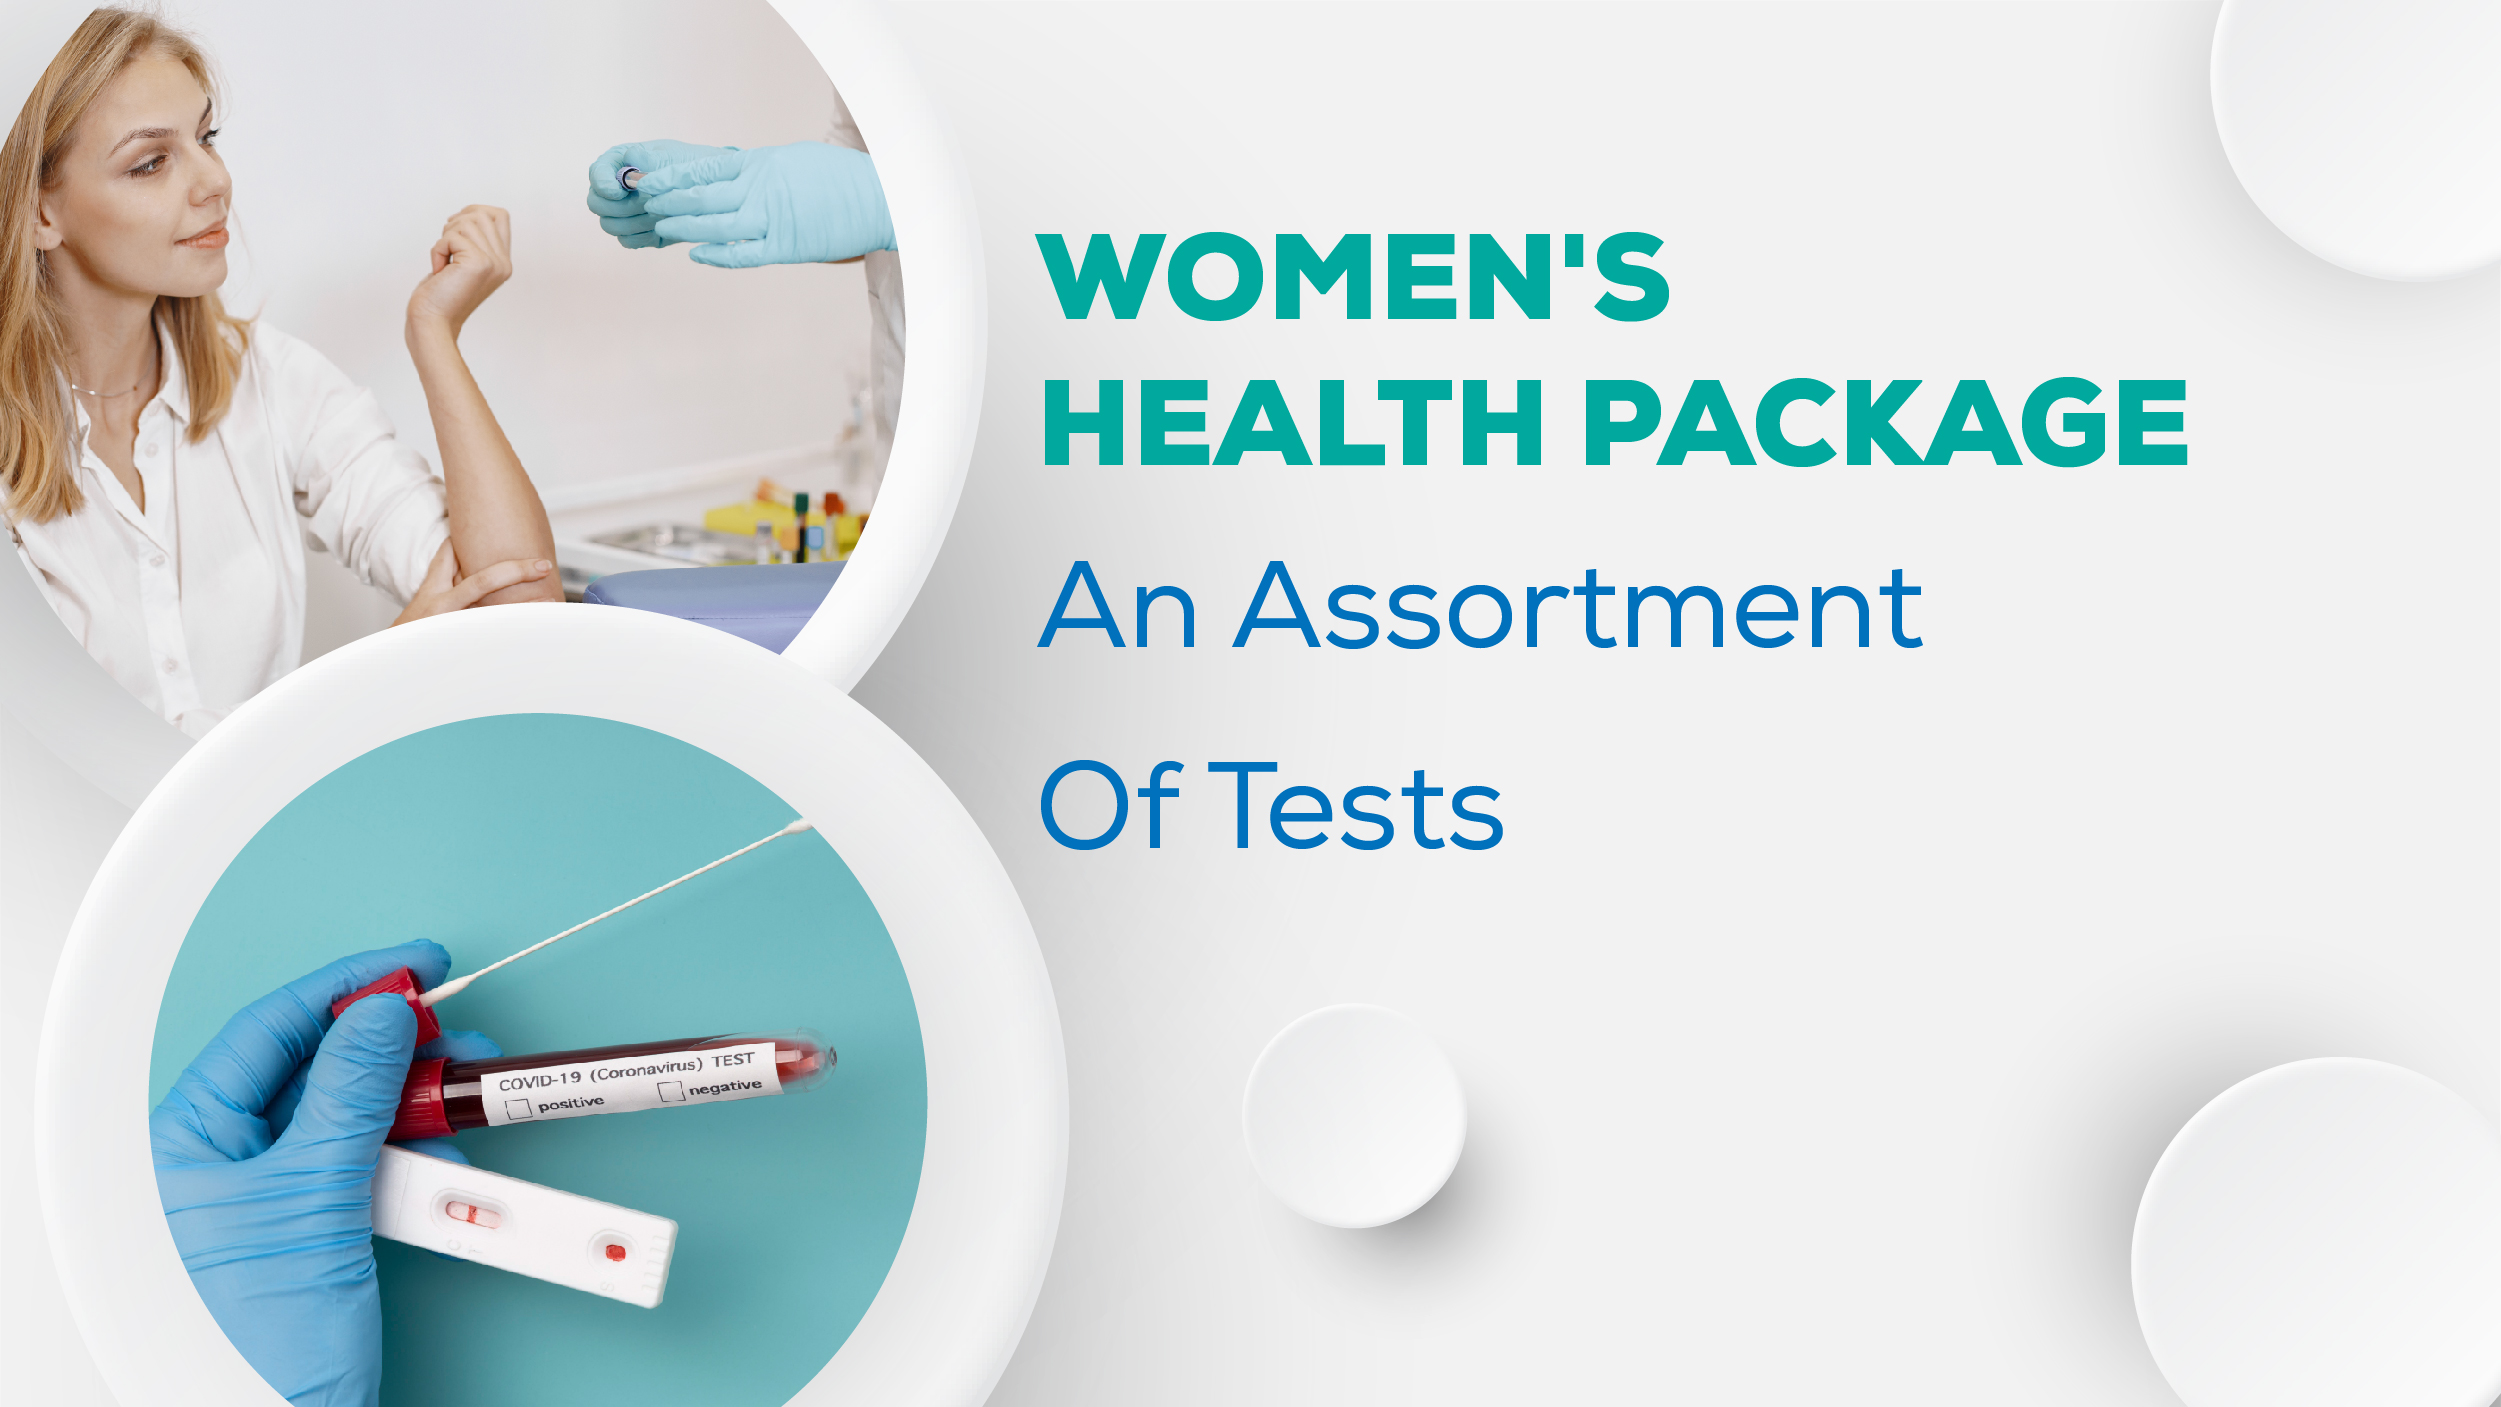 How Often Should Women Have Bone Tests?